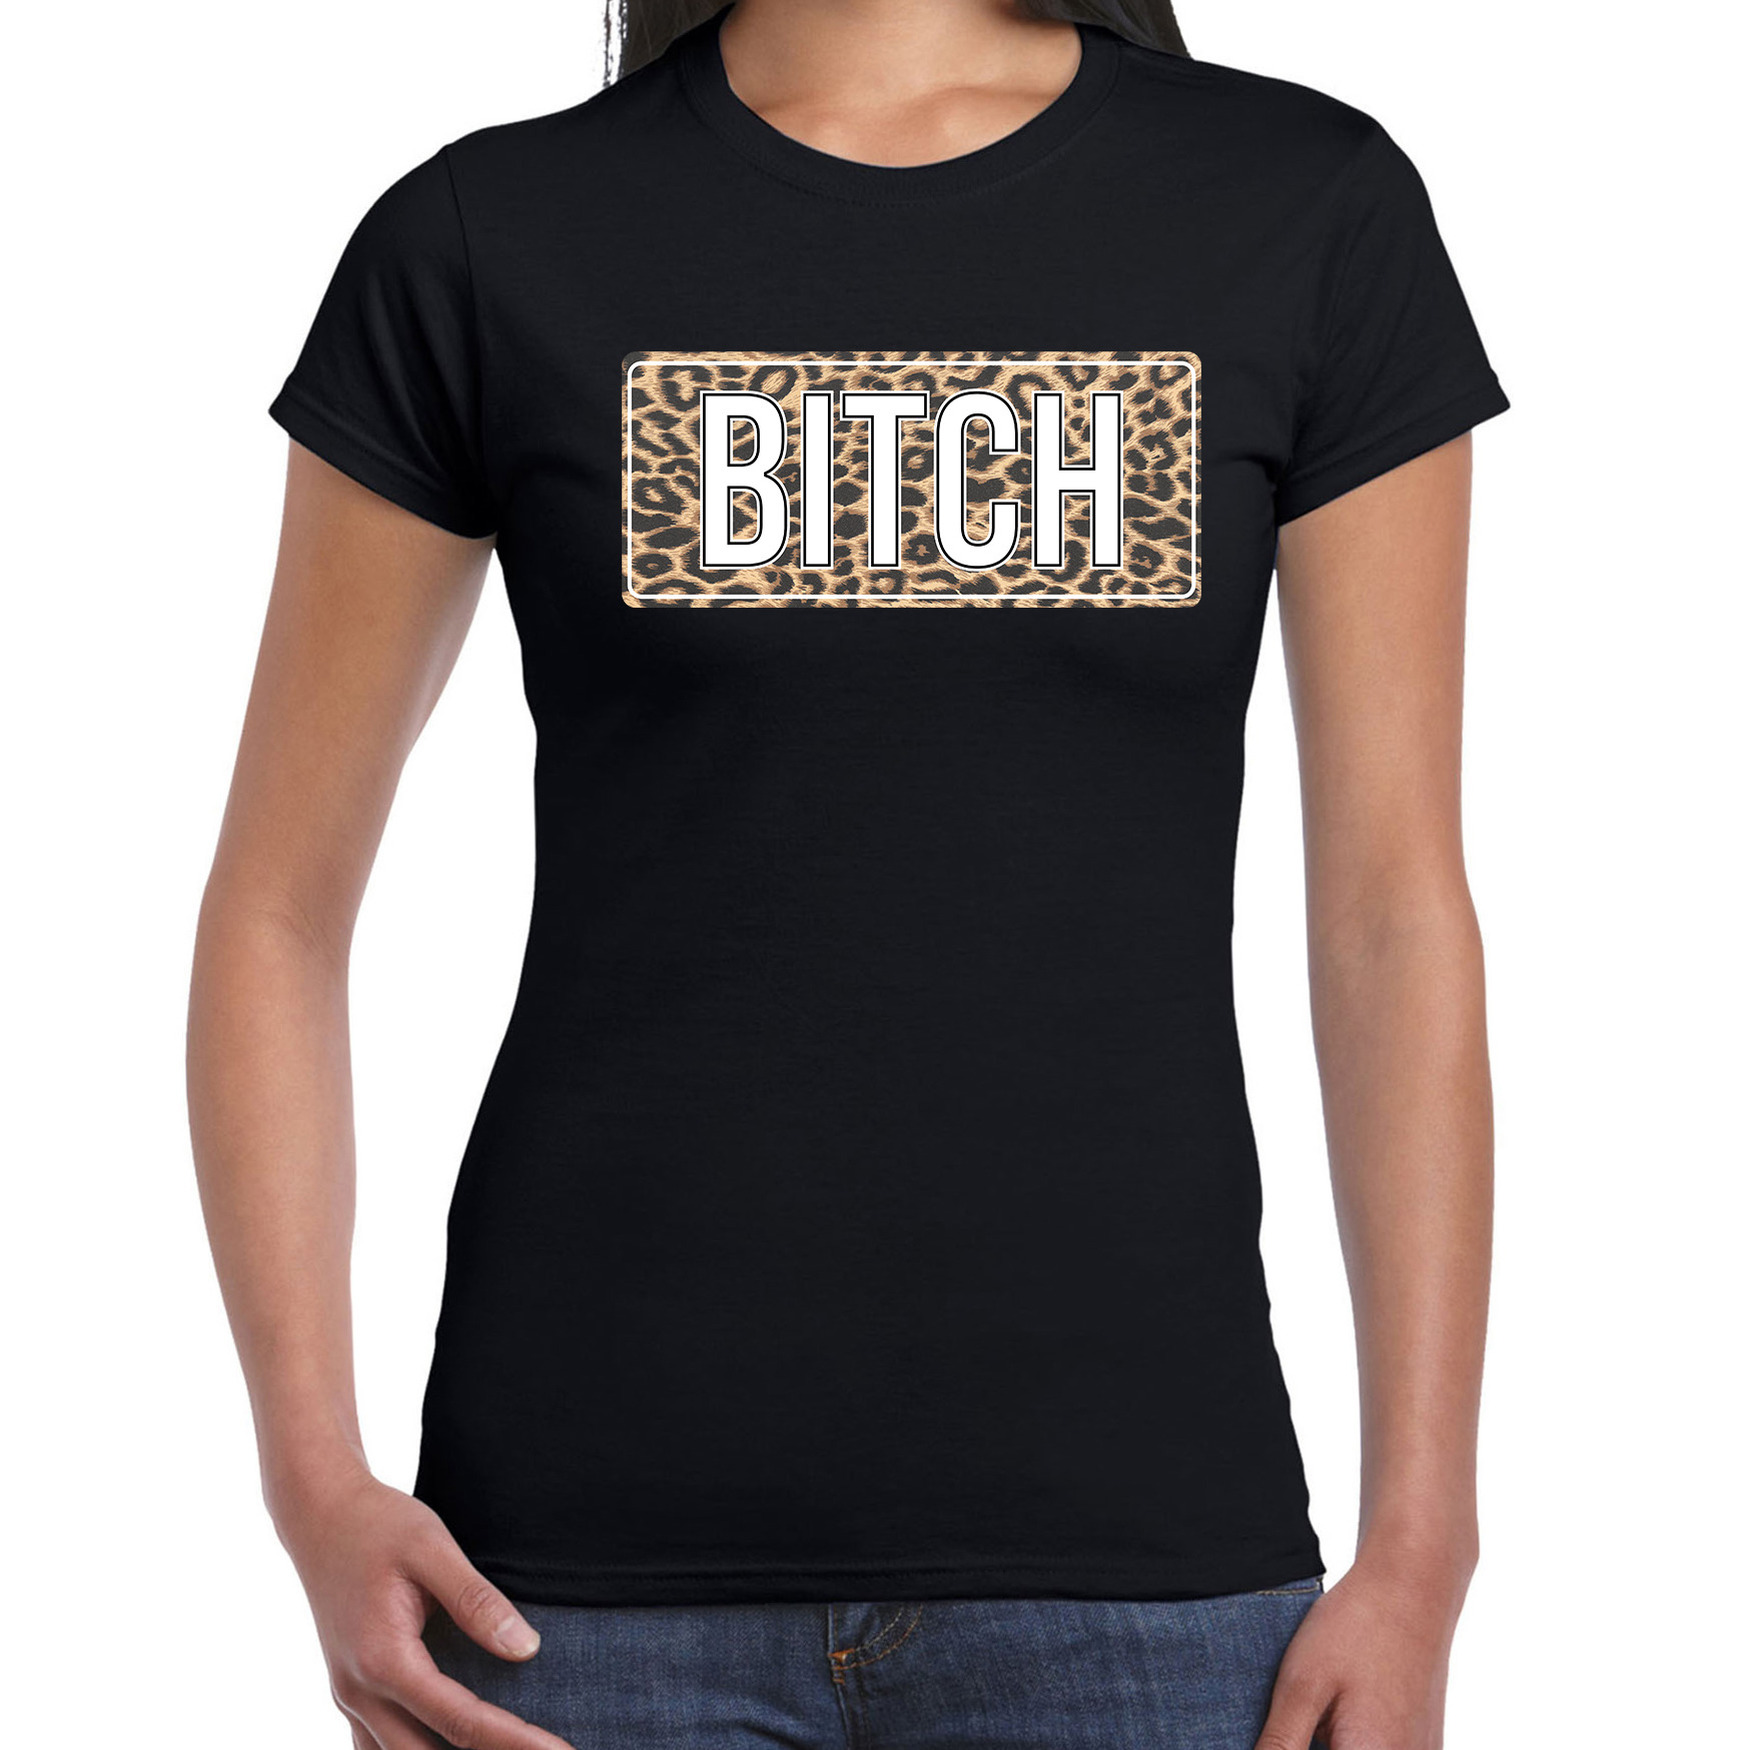 Bitch fun tekst t-shirt zwart voor dames XS -